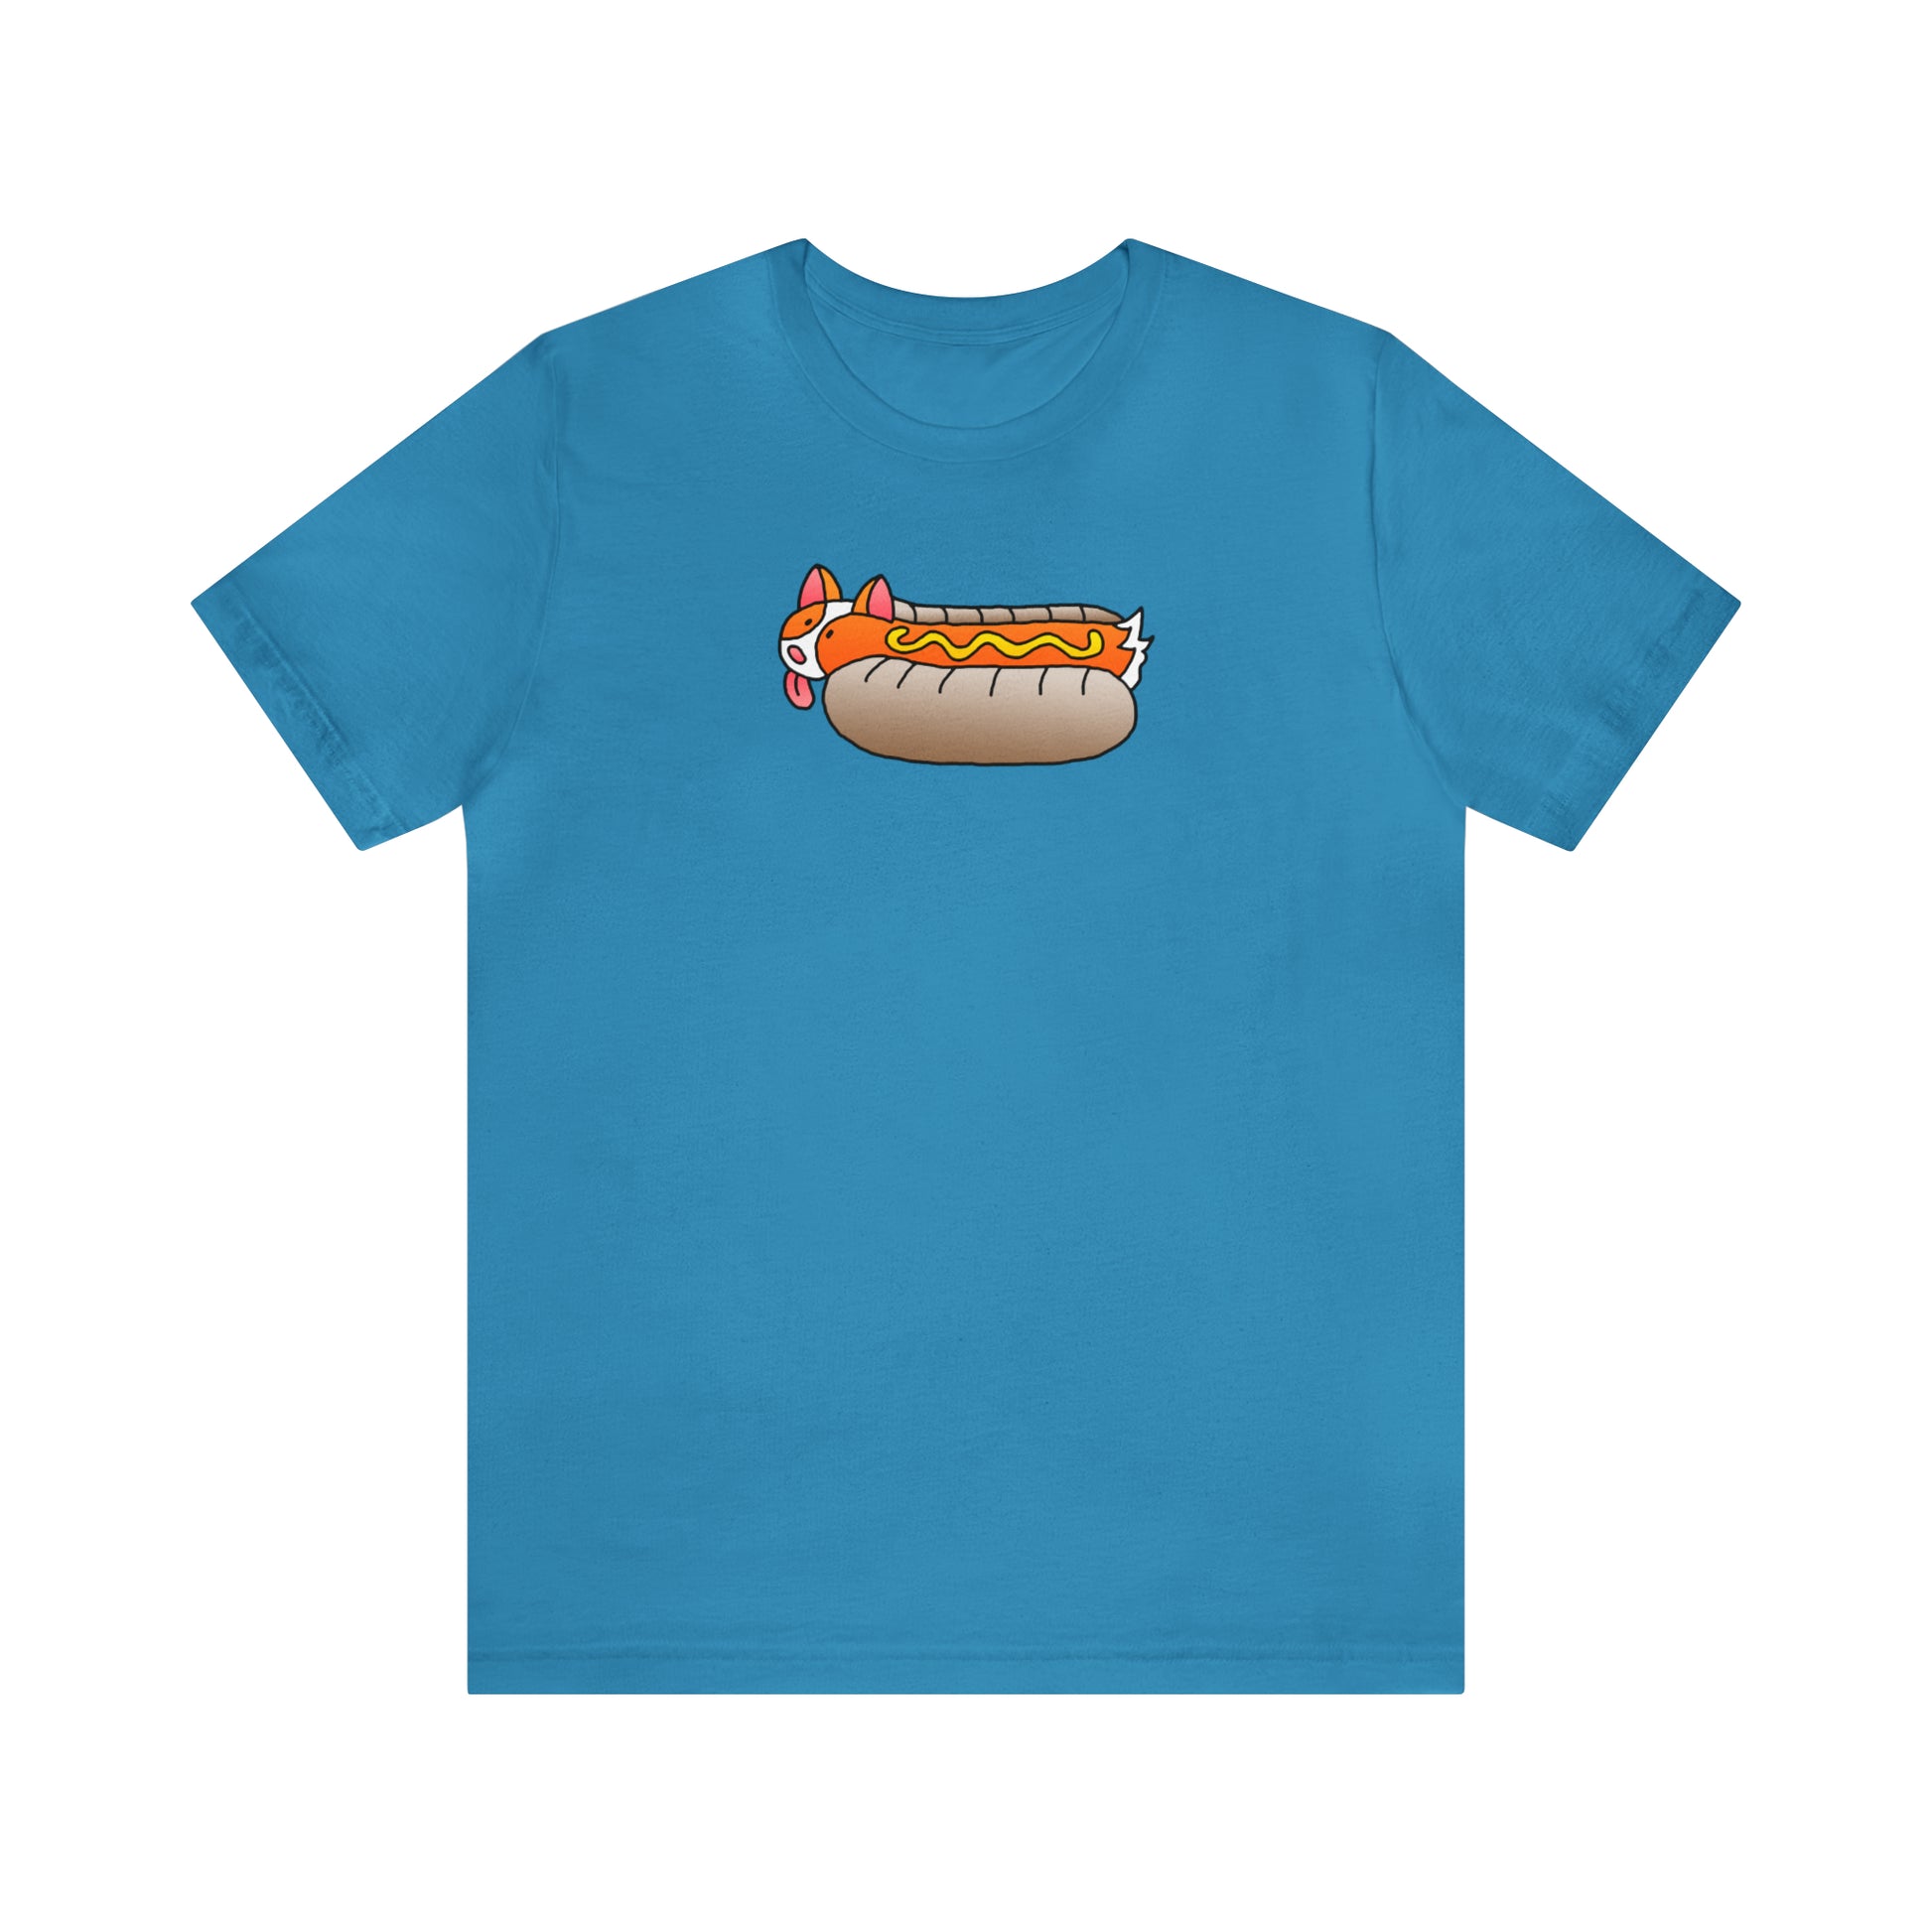 Aqua Bright Blue Teal Front ShoBeaRo logo unisex t-shirt short sleeve men women shirt corgi hot dog I saved a life